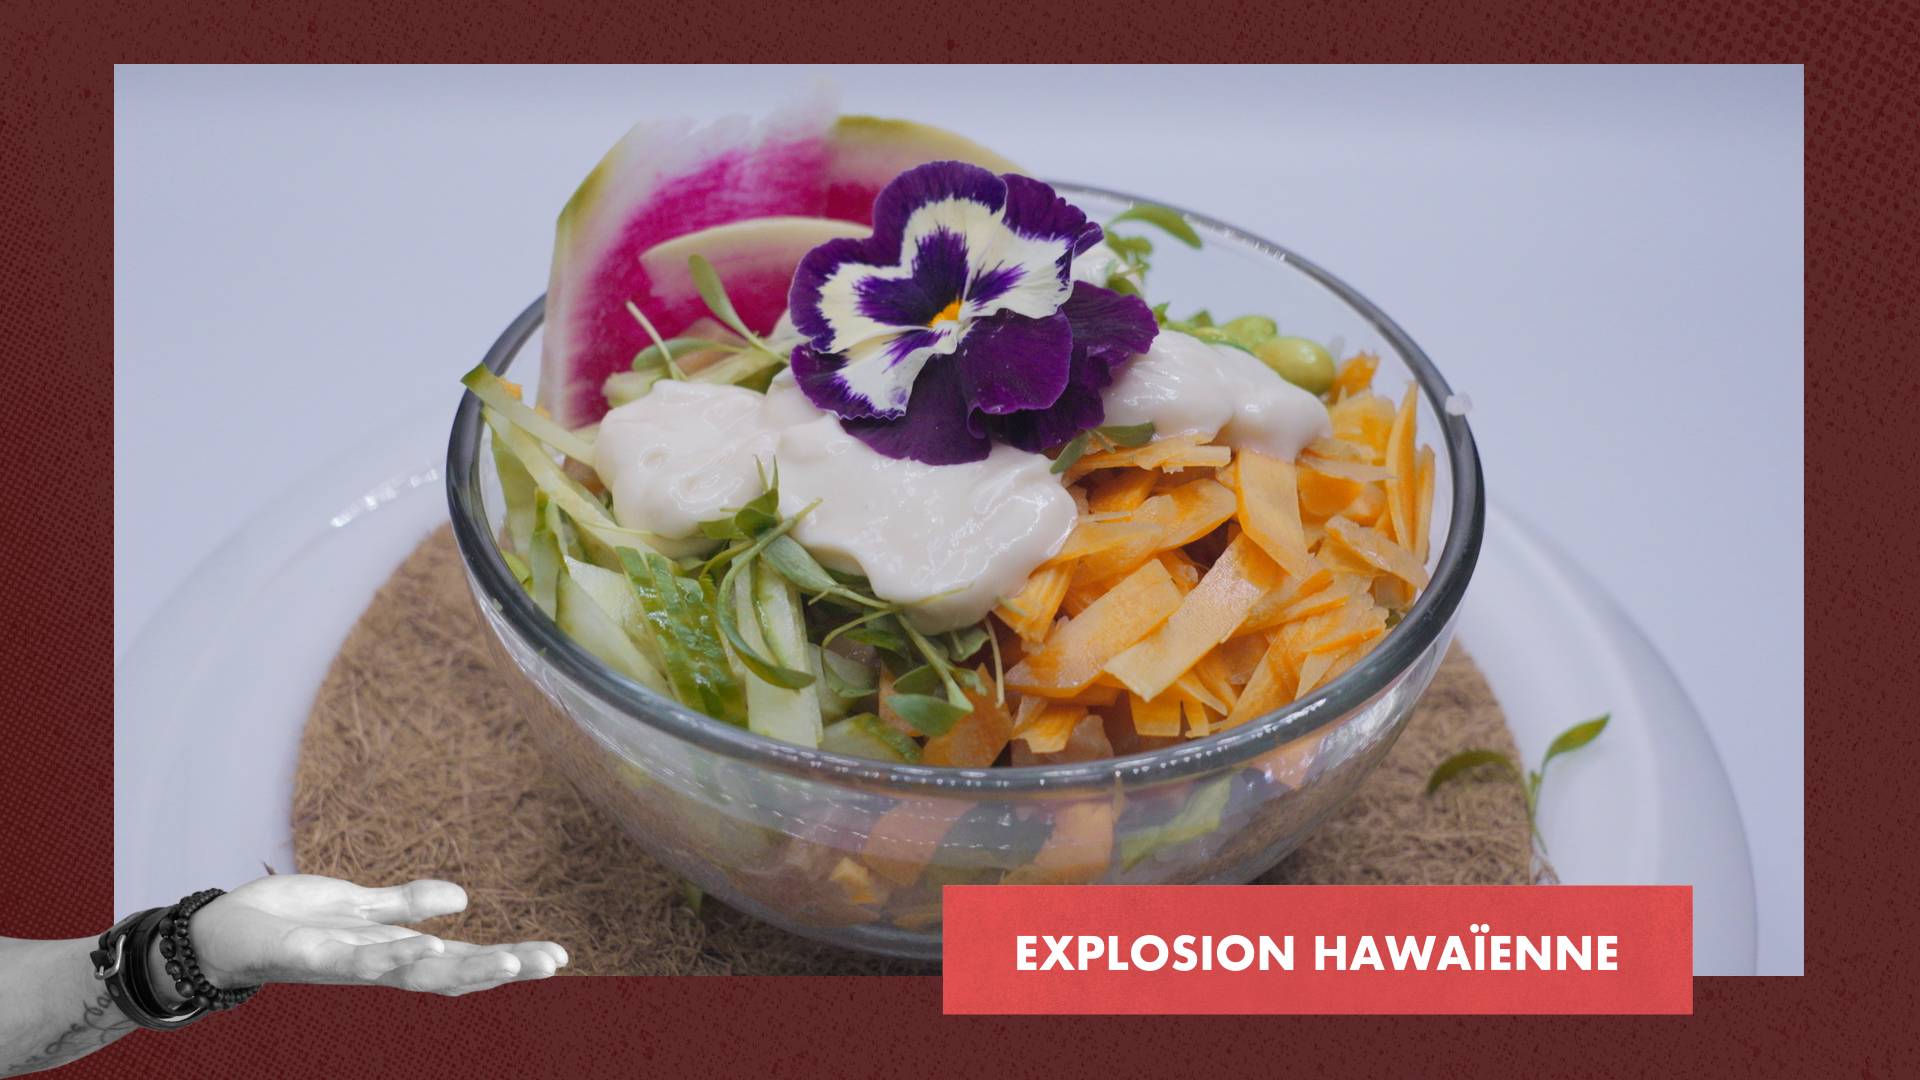 Explosion hawaïenne